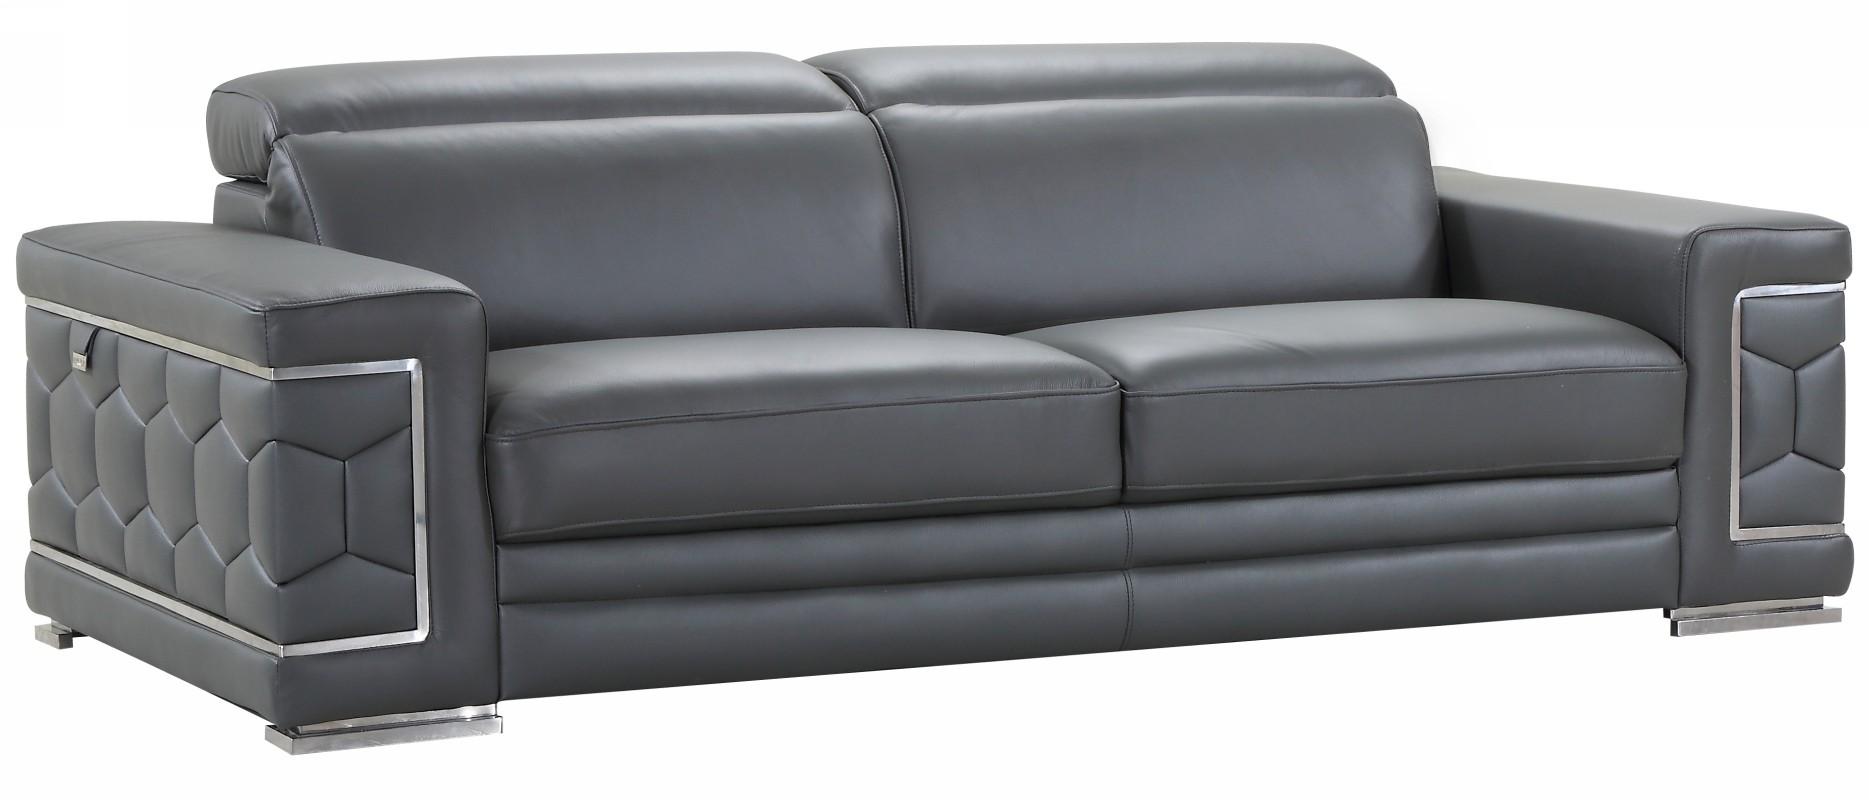 Contemporary Sofa Hawkesbury Common SKU: ORIS1503 in Dark Gray Genuine Leather